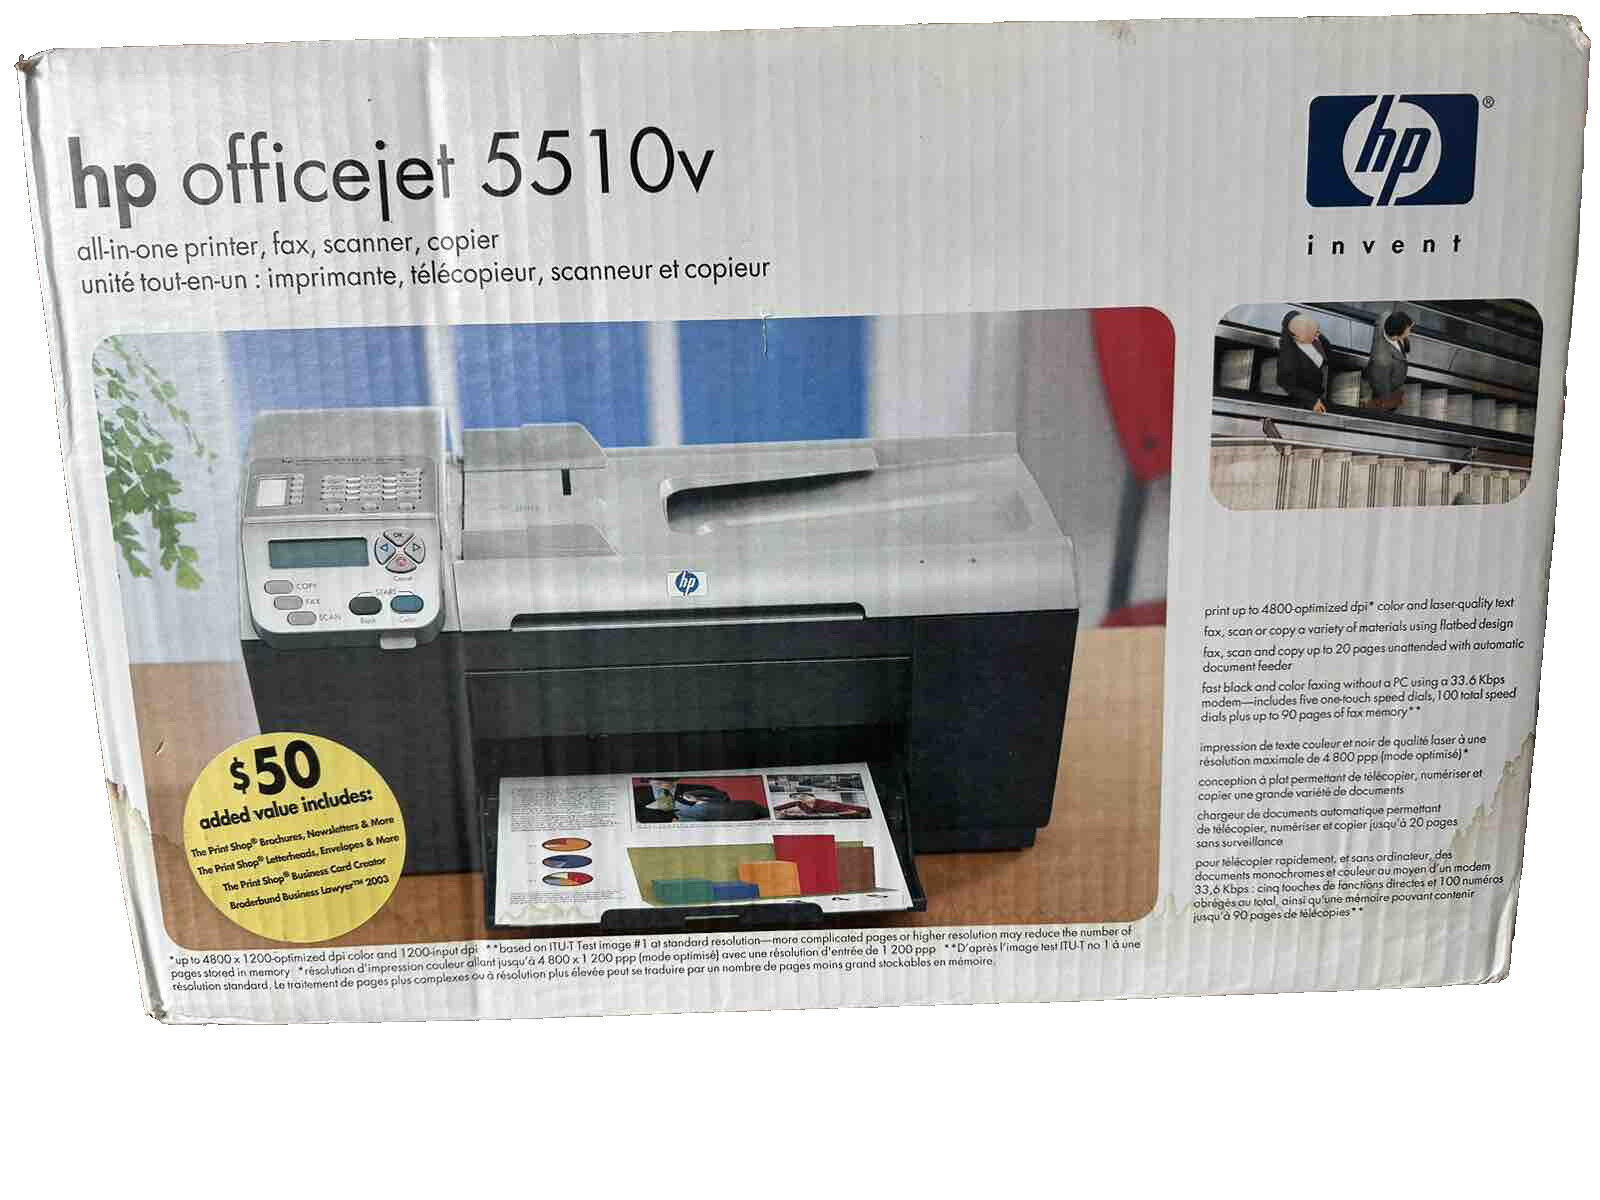 HP OfficeJet 5510v All-In-One Copier Scanner Fax Inkjet Printer New Sealed